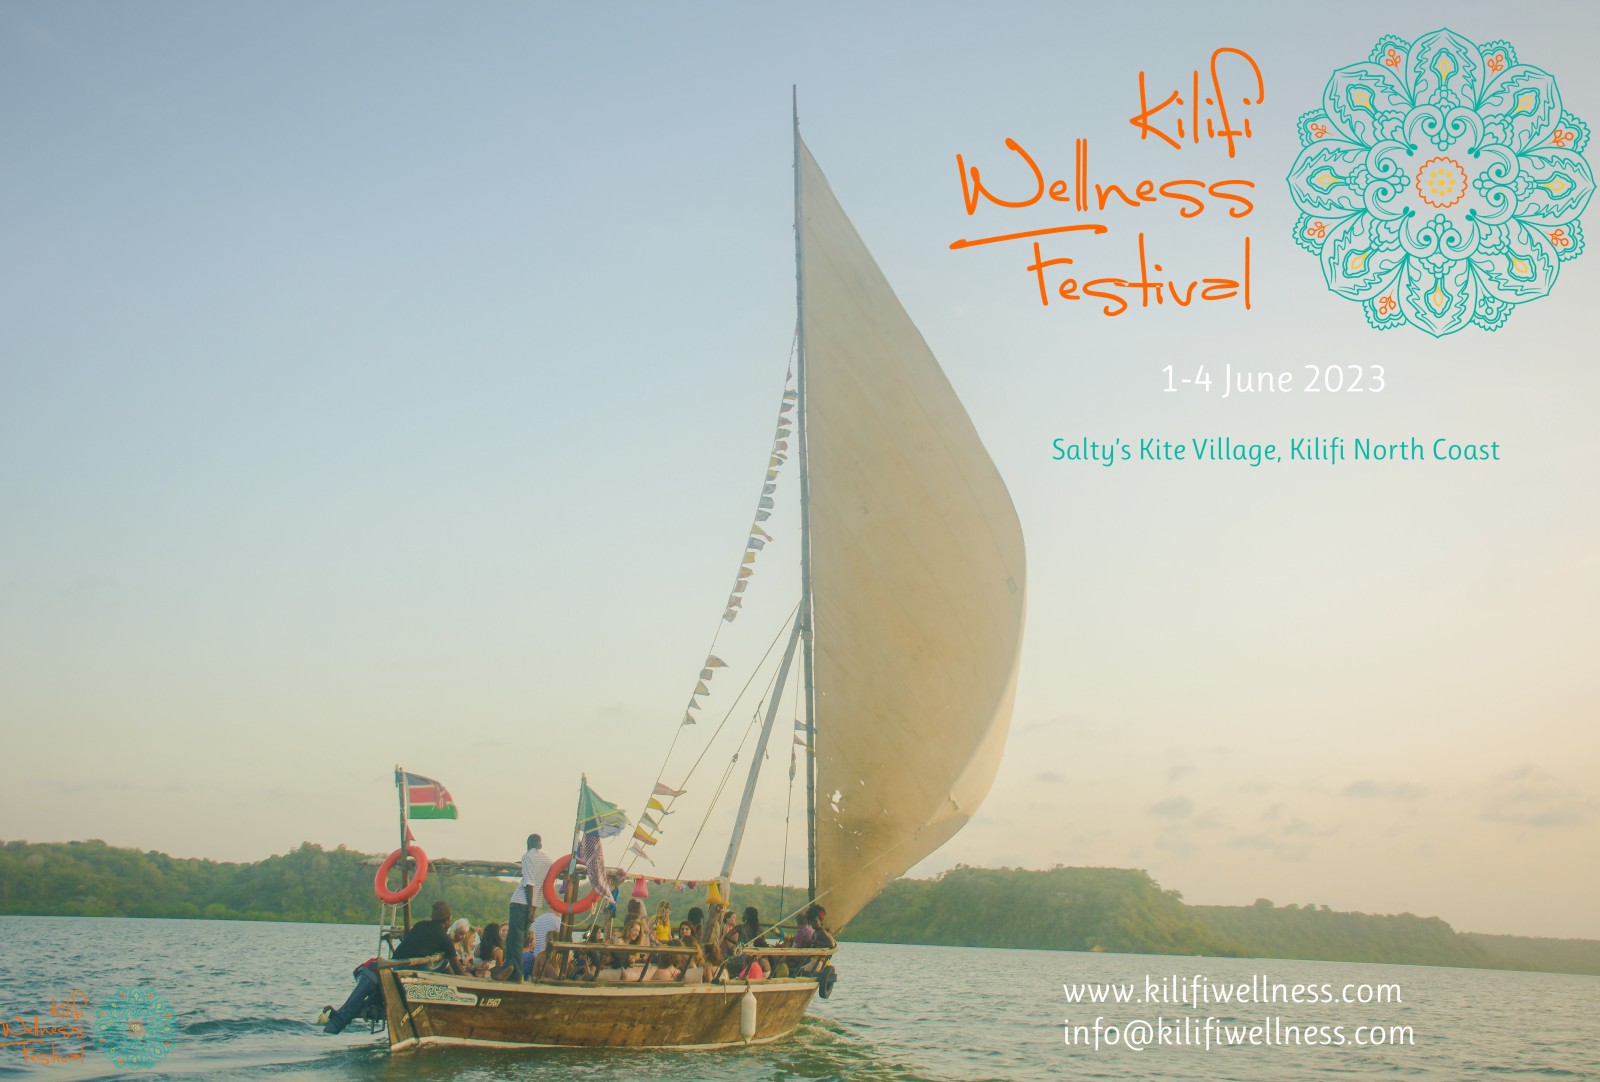 Kilifi Wellness Festival and Mnarani Club